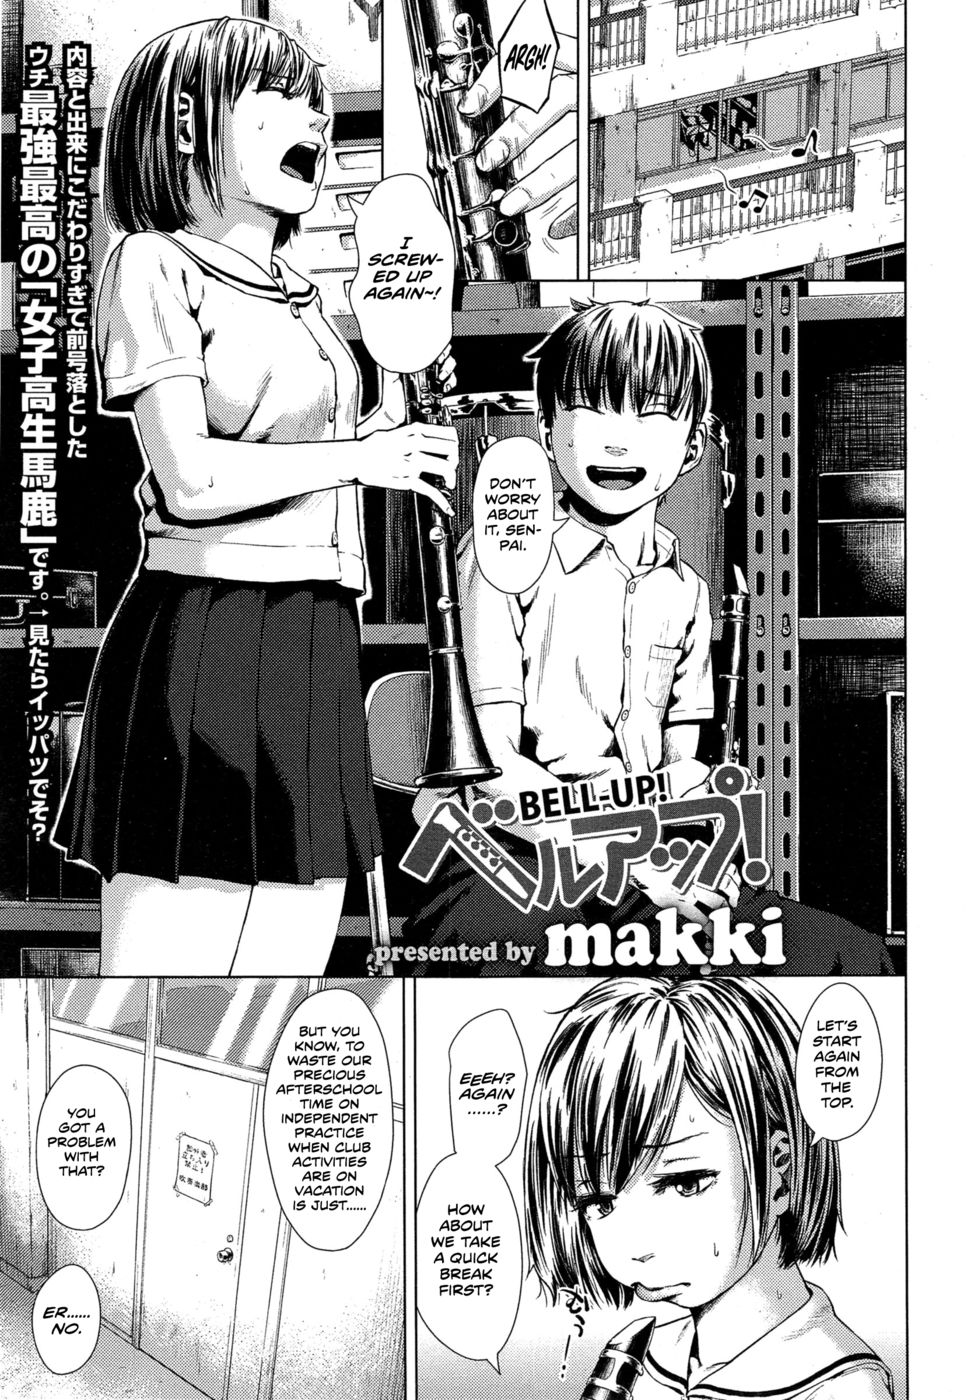 Hentai Manga Comic-Bell-Up!-Read-1